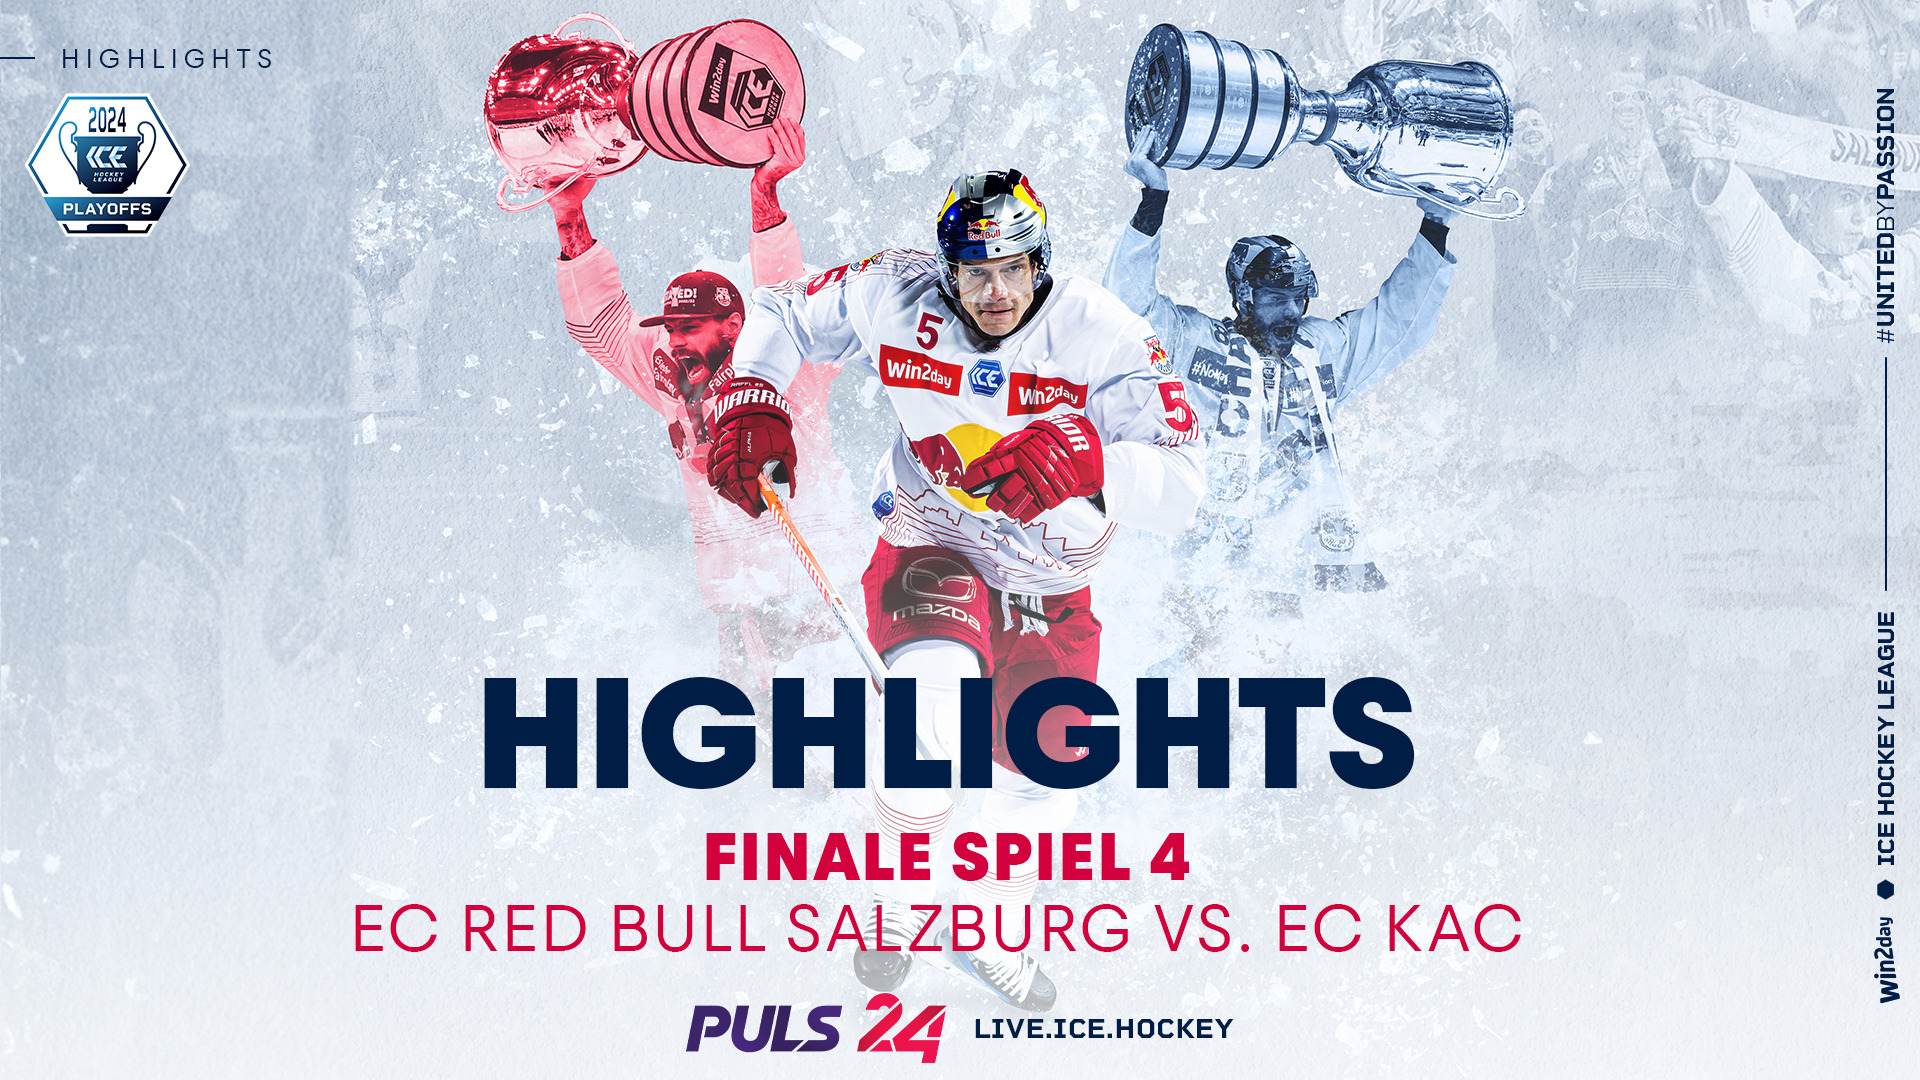 Highlights Finale 4: EC Red Bull Salzburg vs. EC KAC